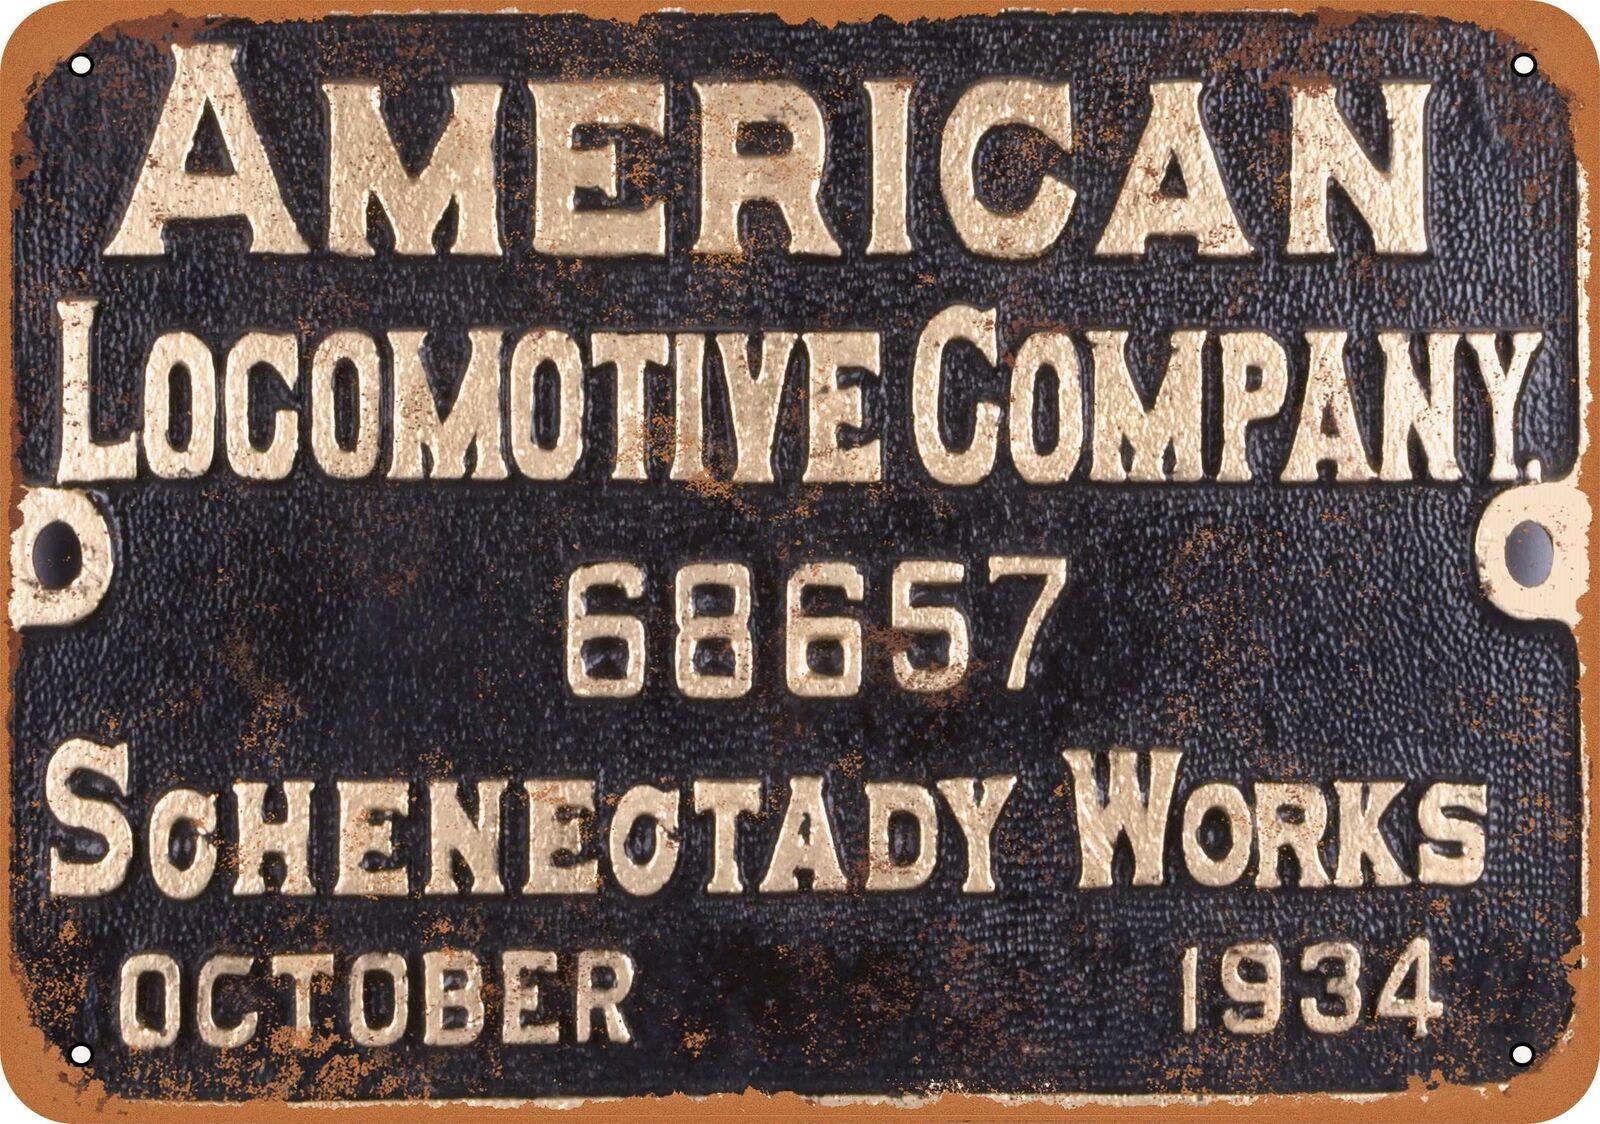 Metal Sign - 1934 Alco Builder Plate Schenectady Works - Vintage Look R